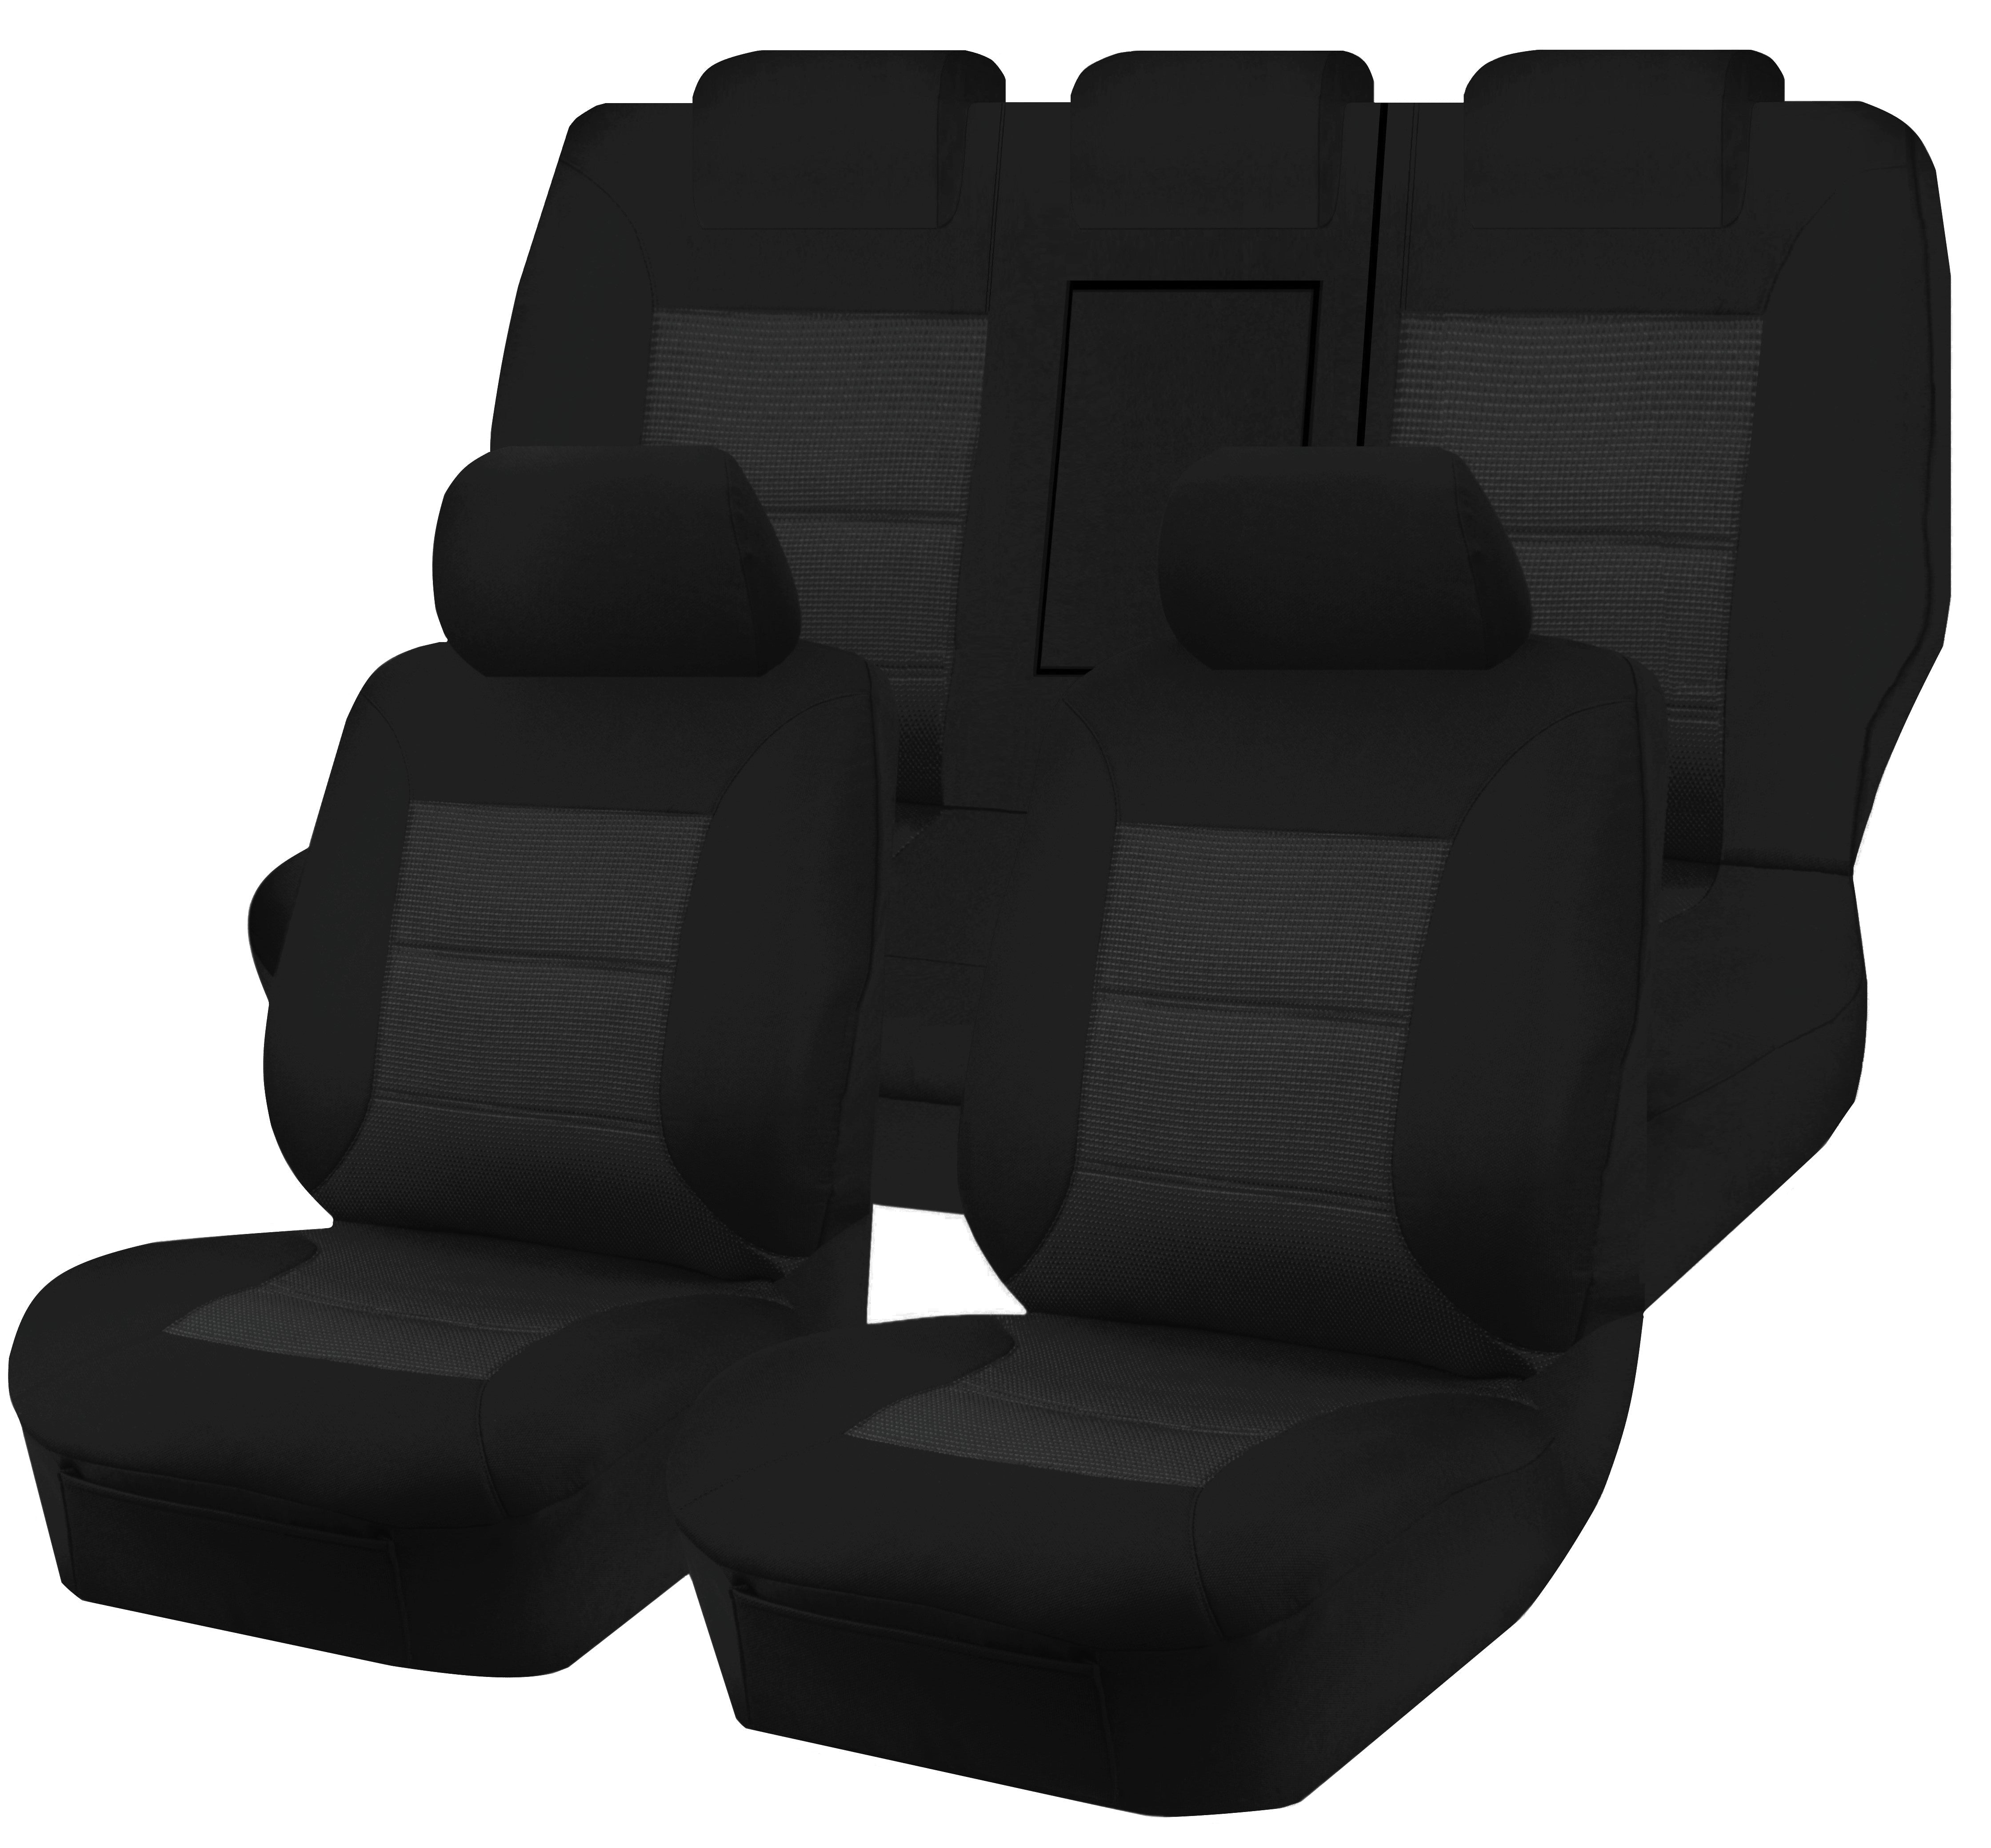 Premium Jacquard Seat Covers - For Ford Territory Sx/Sy/Sz Series 4X4 Suv/Wagon (2004-2016)